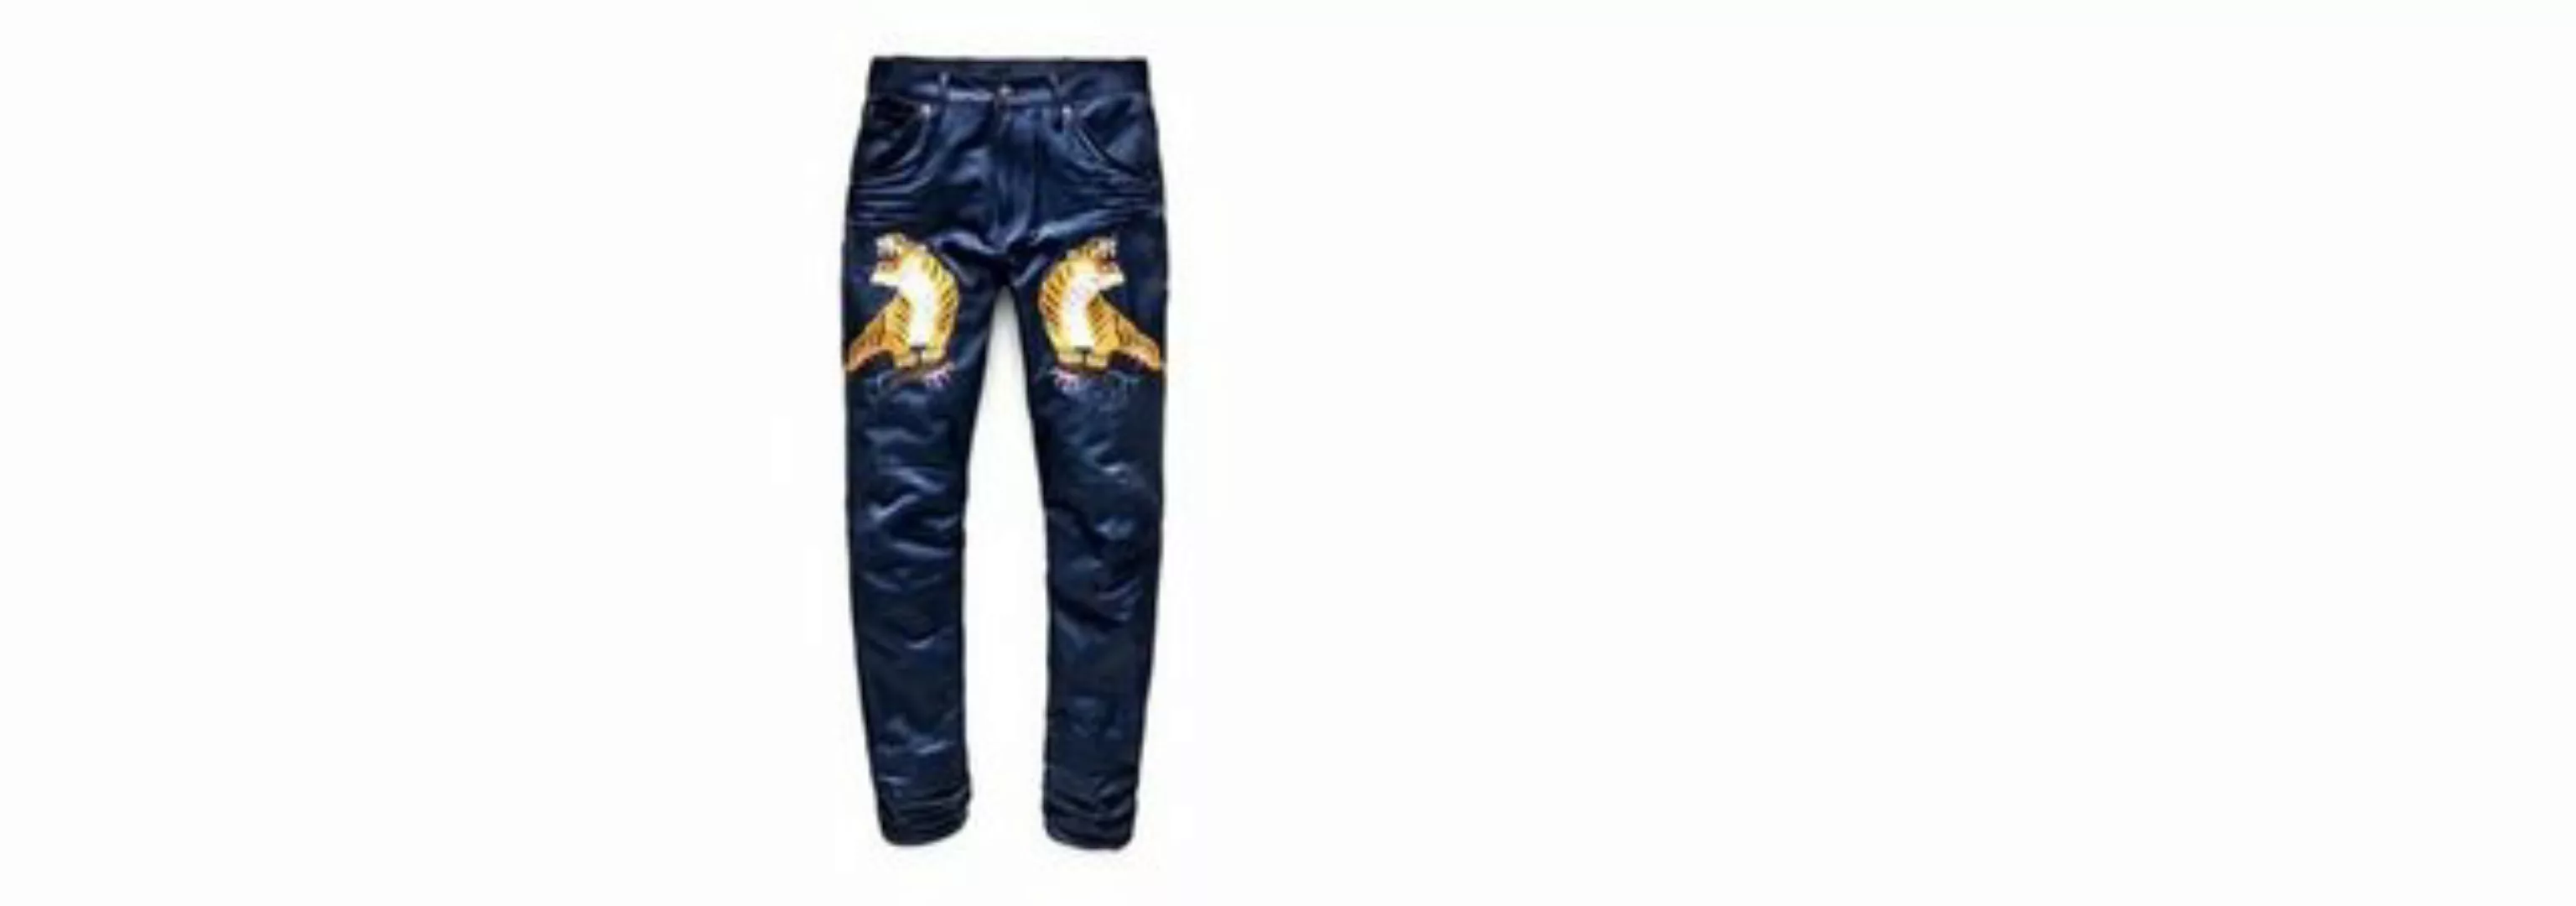 G-star Elwood 5622 3d Mid Waist Boyfriend Color Jeans 27 Sartho Blue Aop günstig online kaufen